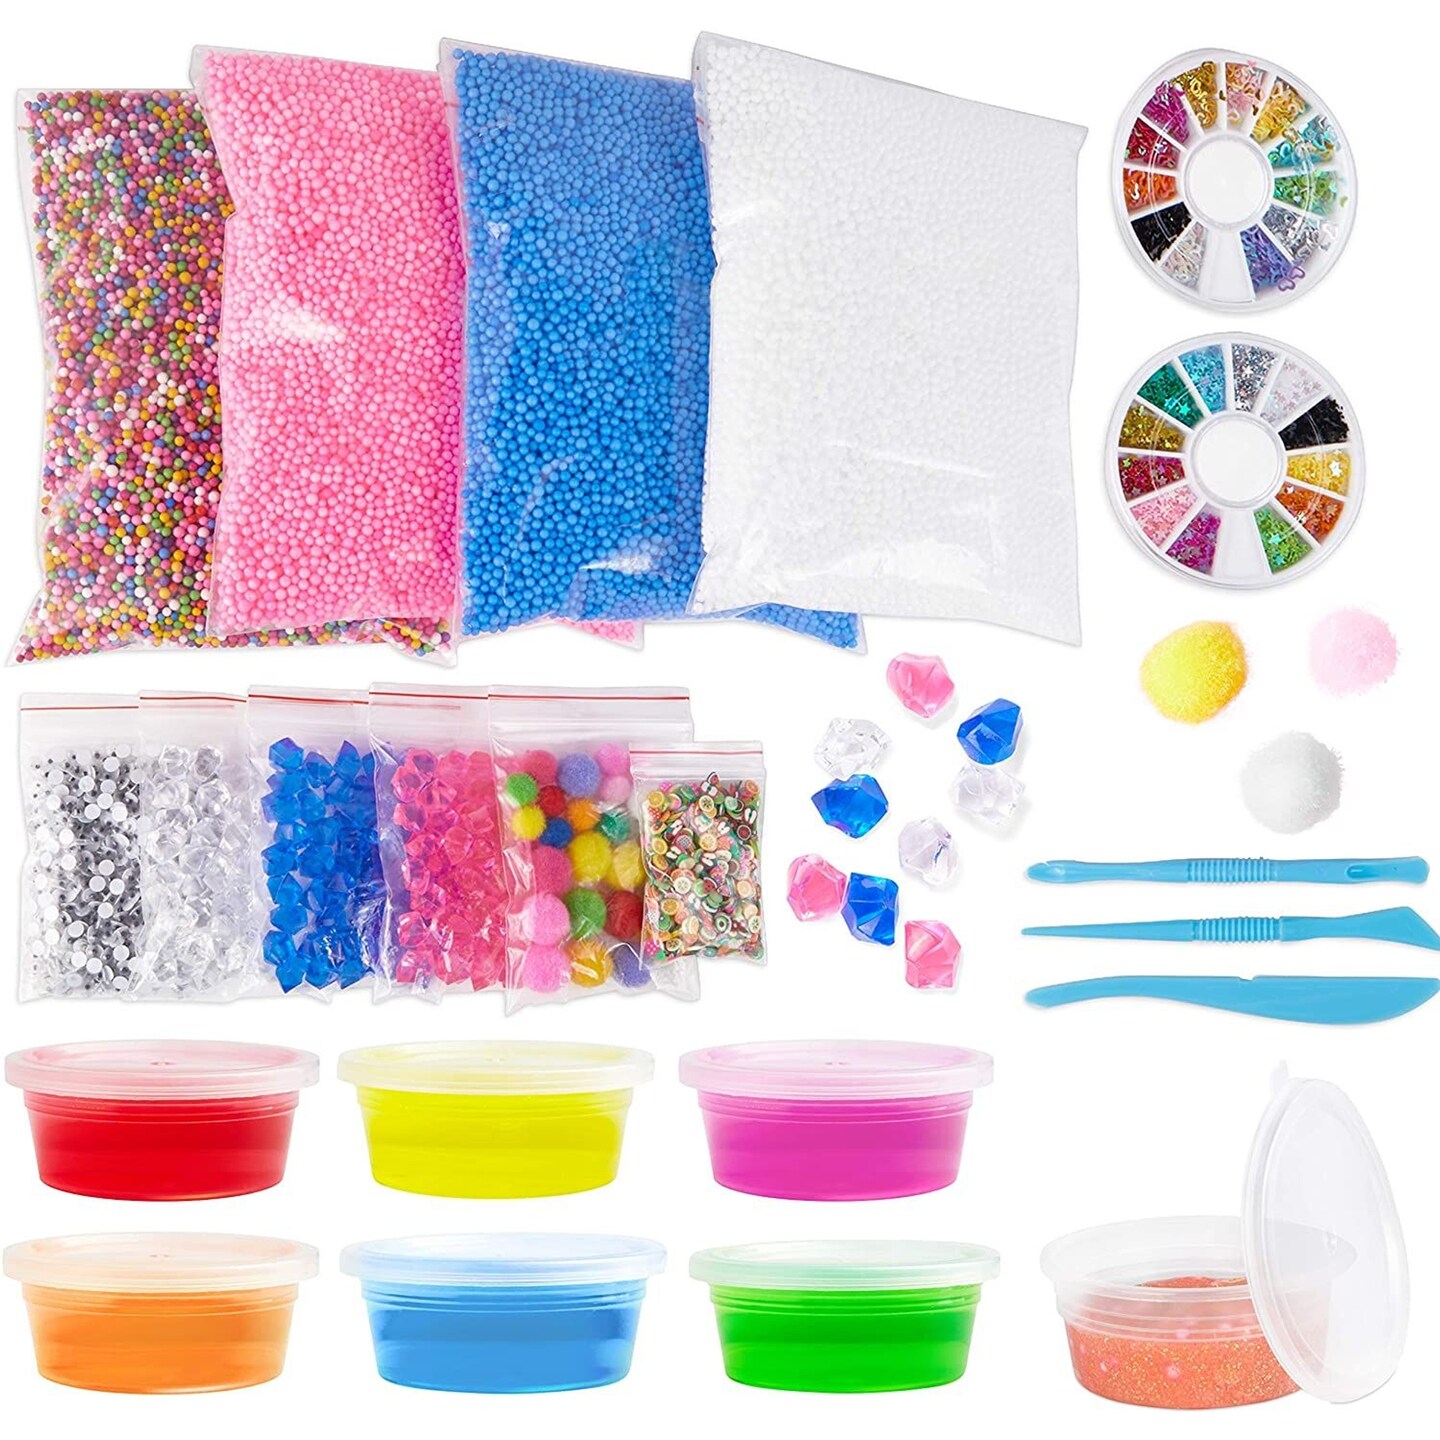 Kids Slime Kit with Foam Beads, Acrylic Rocks, Fruit Slices